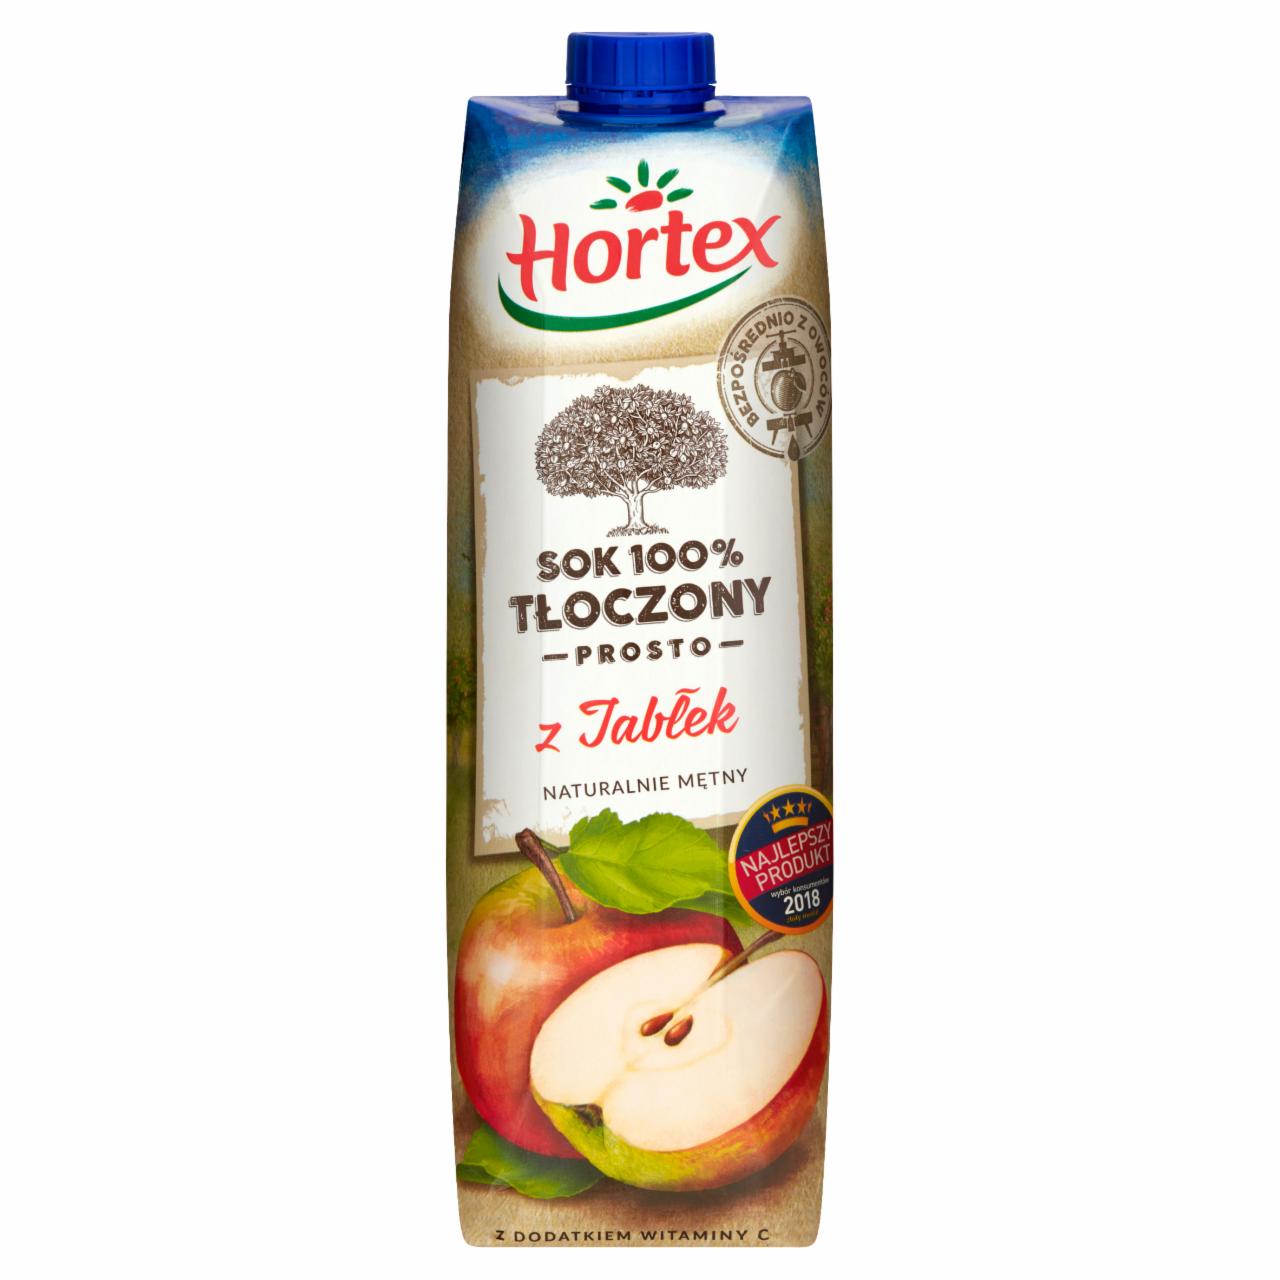 Zdjęcia - Hortex Sok 100% tłoczony prosto z jabłek 1 l